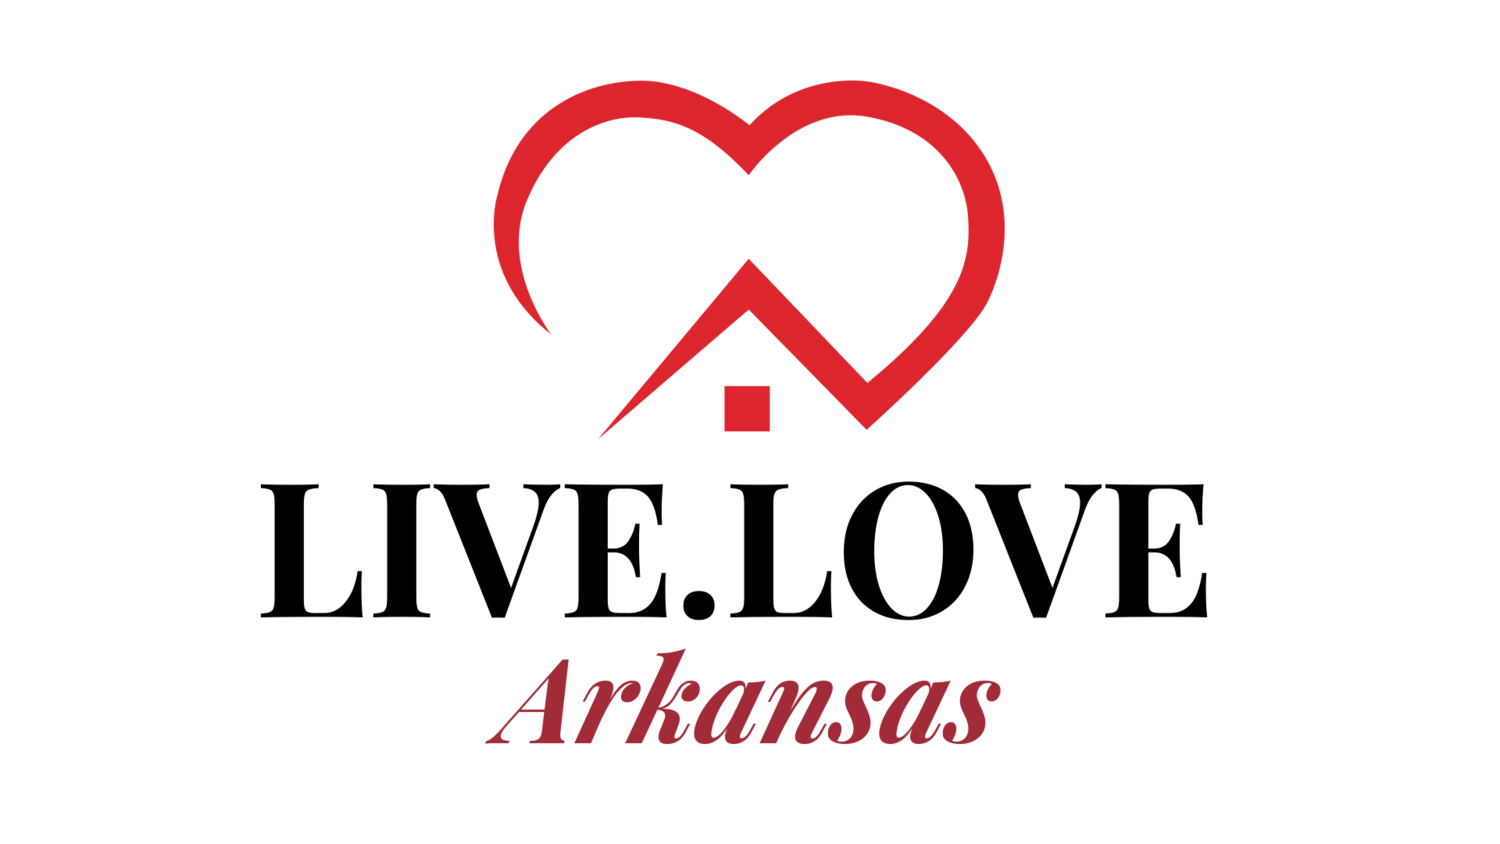 Live Love Arkansas